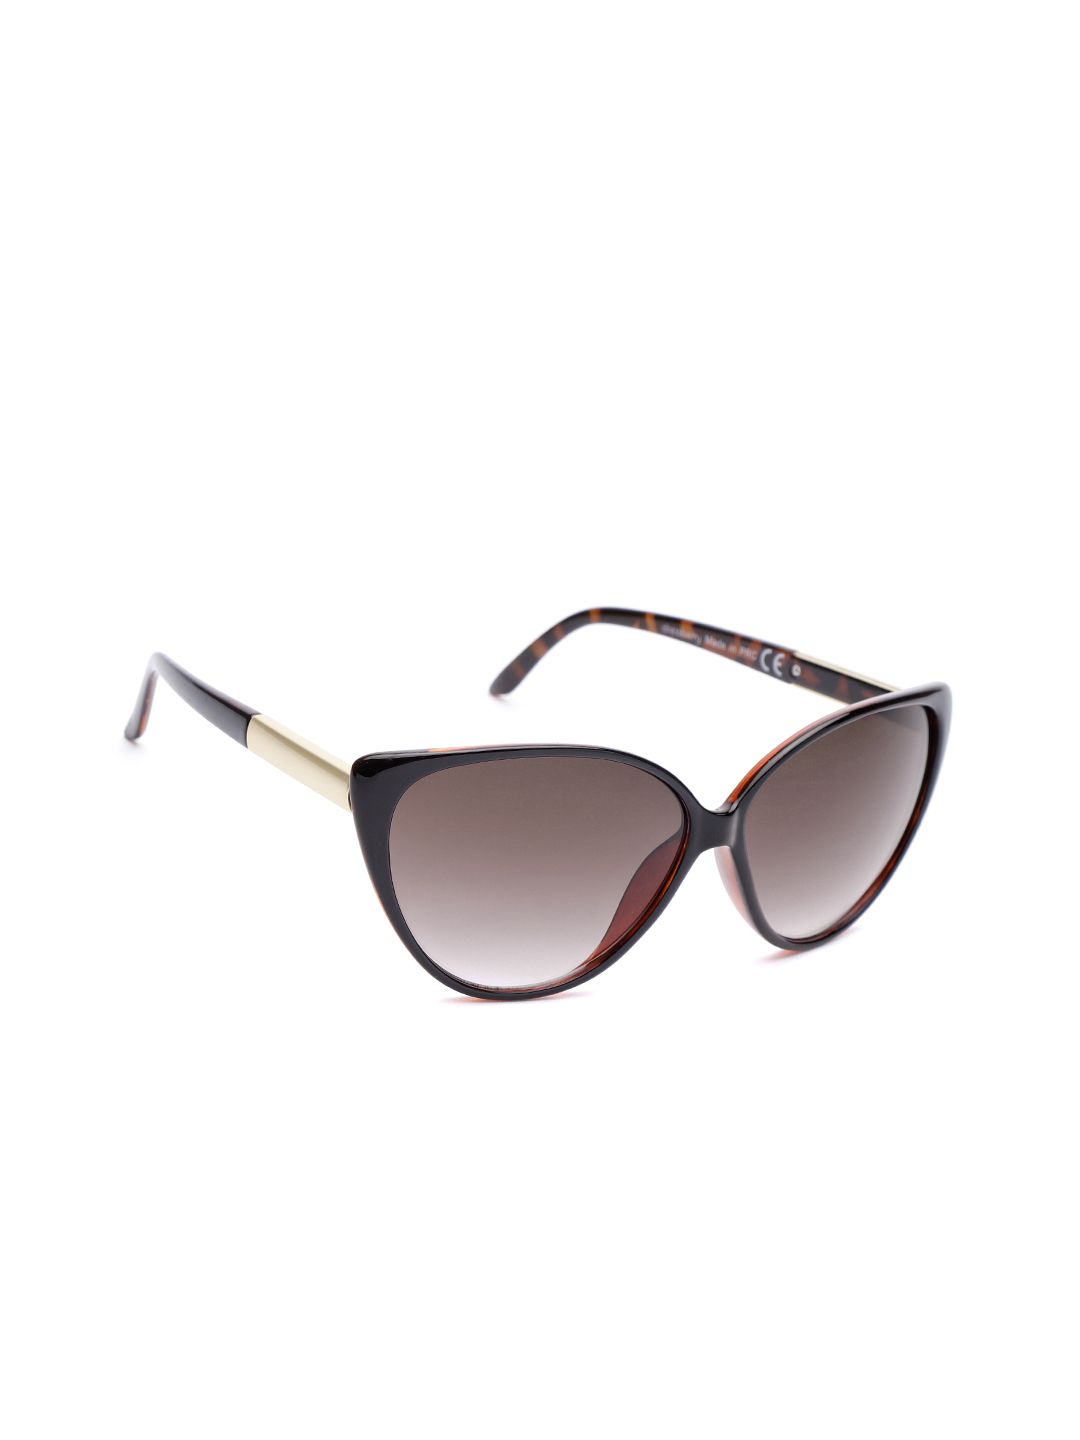 DressBerry Women Cateye Sunglasses MFB-PN-PS-A4342 Price in India